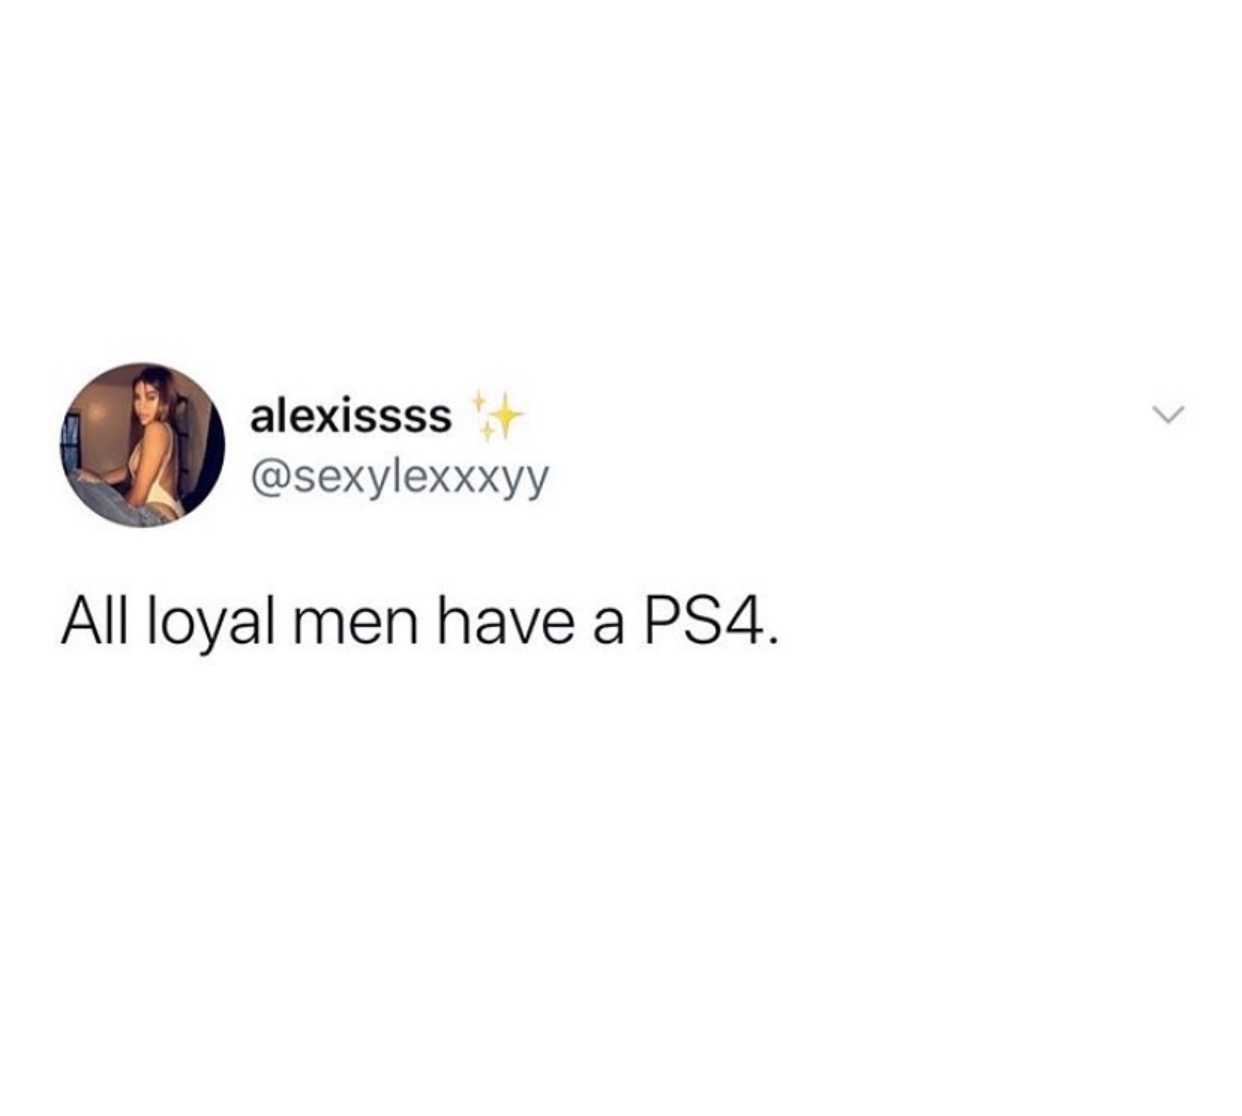 graphics - alexissss All loyal men have a PS4.